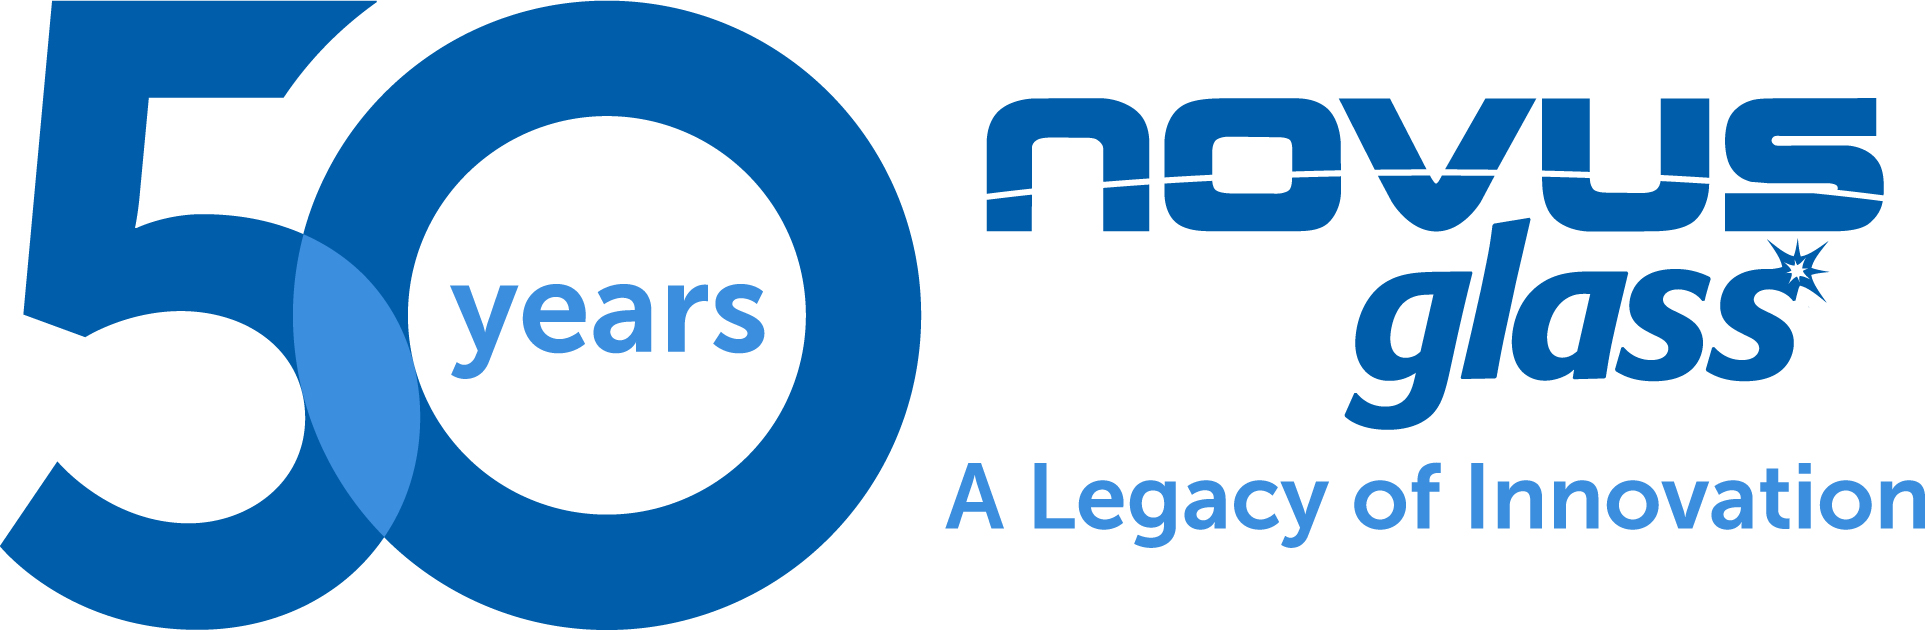 novus_50_horz-logo-full-color-rgb